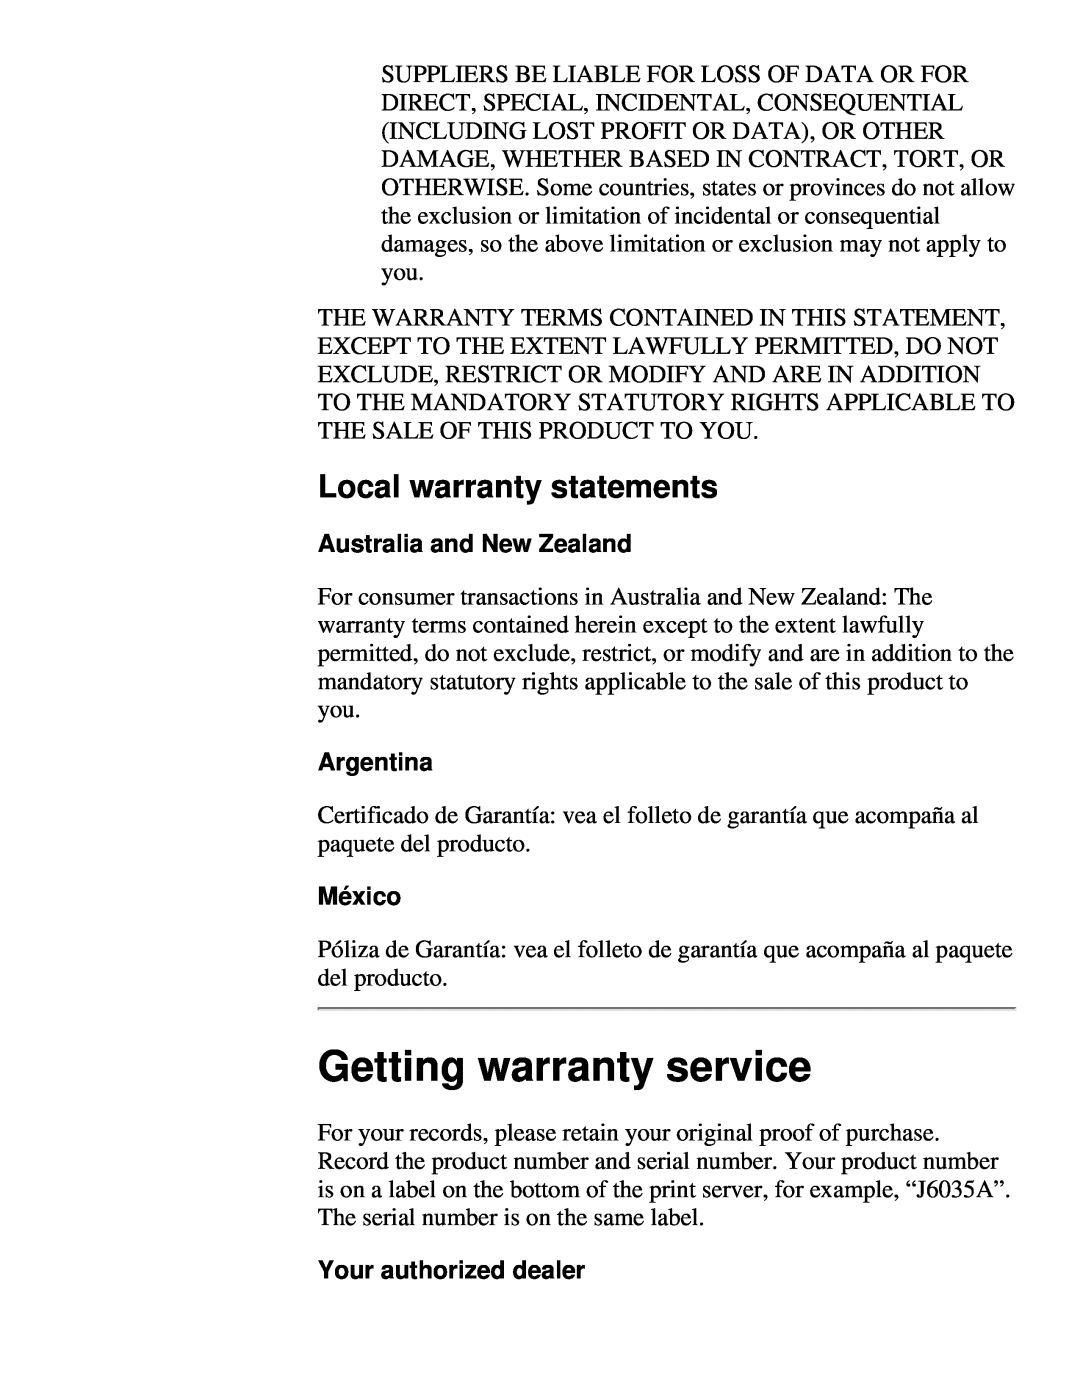 HP 310X, 175X manual Getting warranty service, Local warranty statements, Australia and New Zealand, Argentina, México 